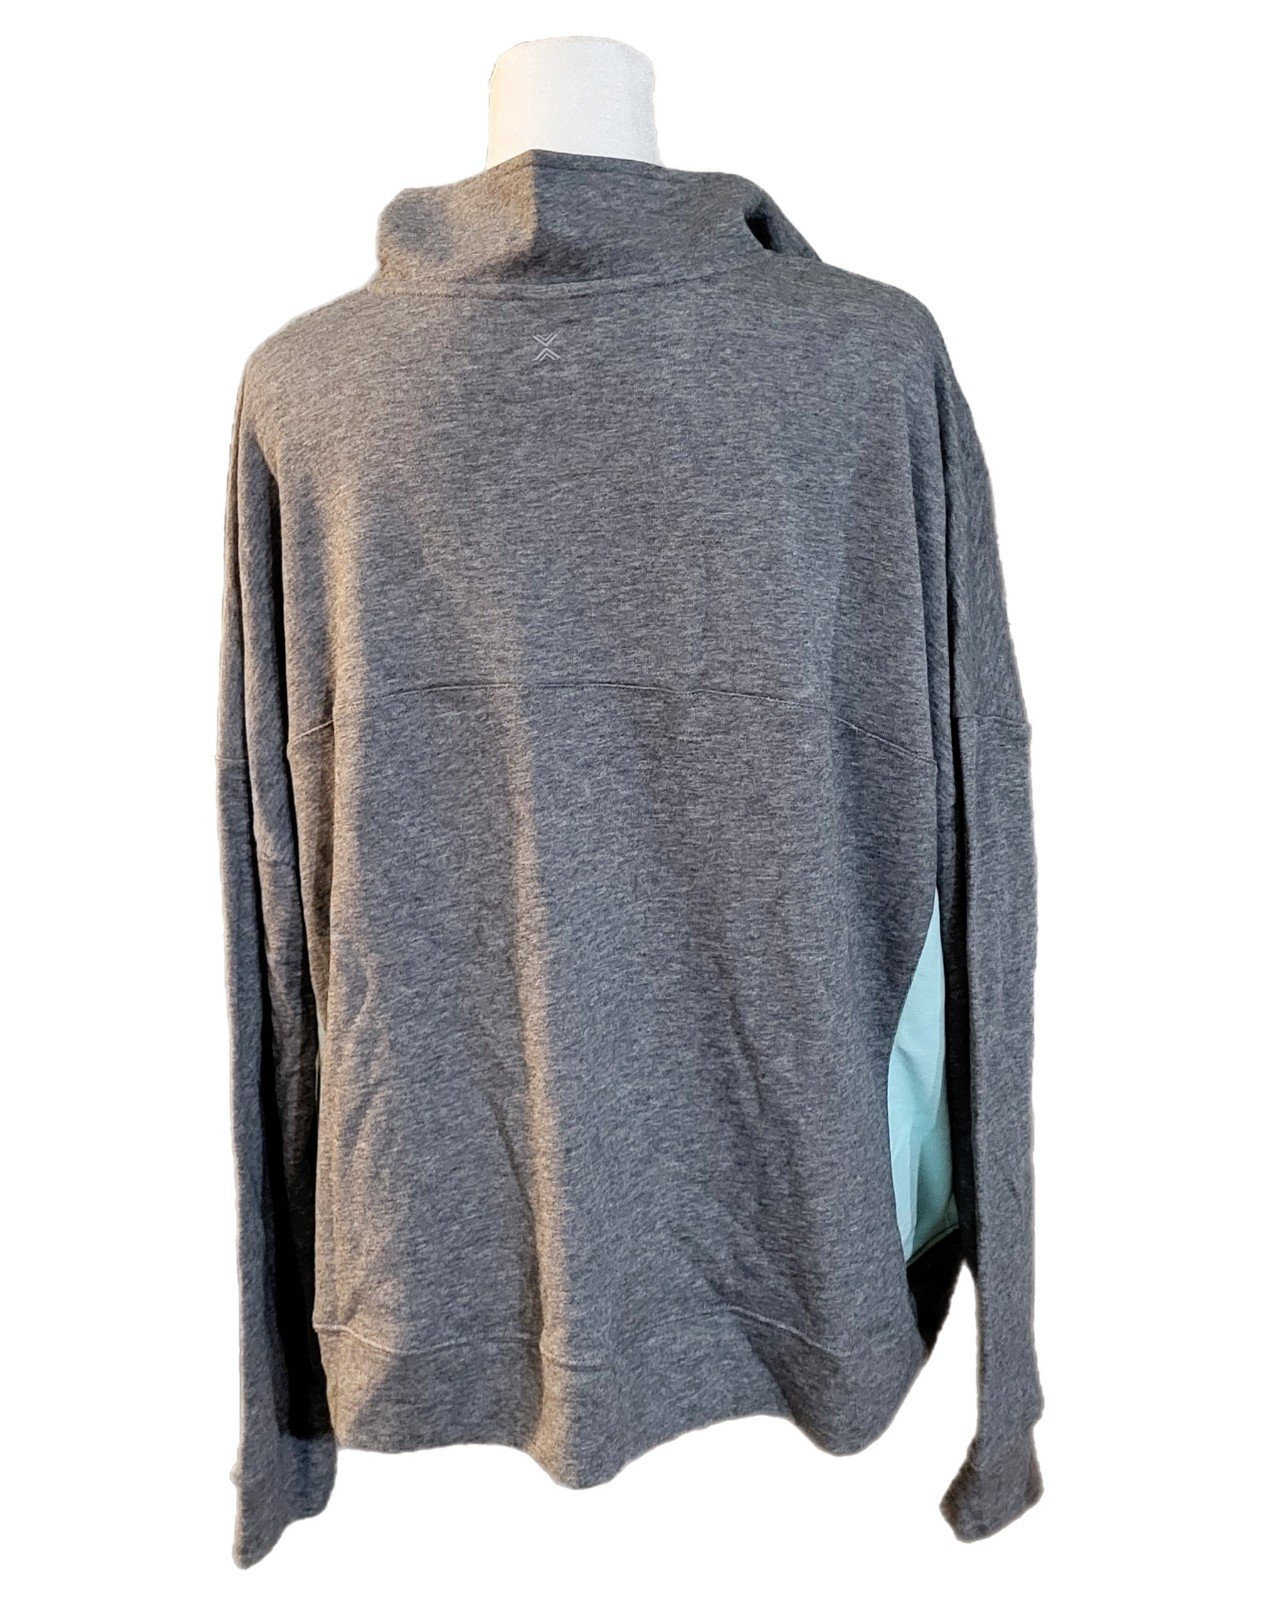 Simple New Xersion 1/4 zip high collared color block, pullover jacket sweatshirt Sz 0x JtEplrW3W Fashion